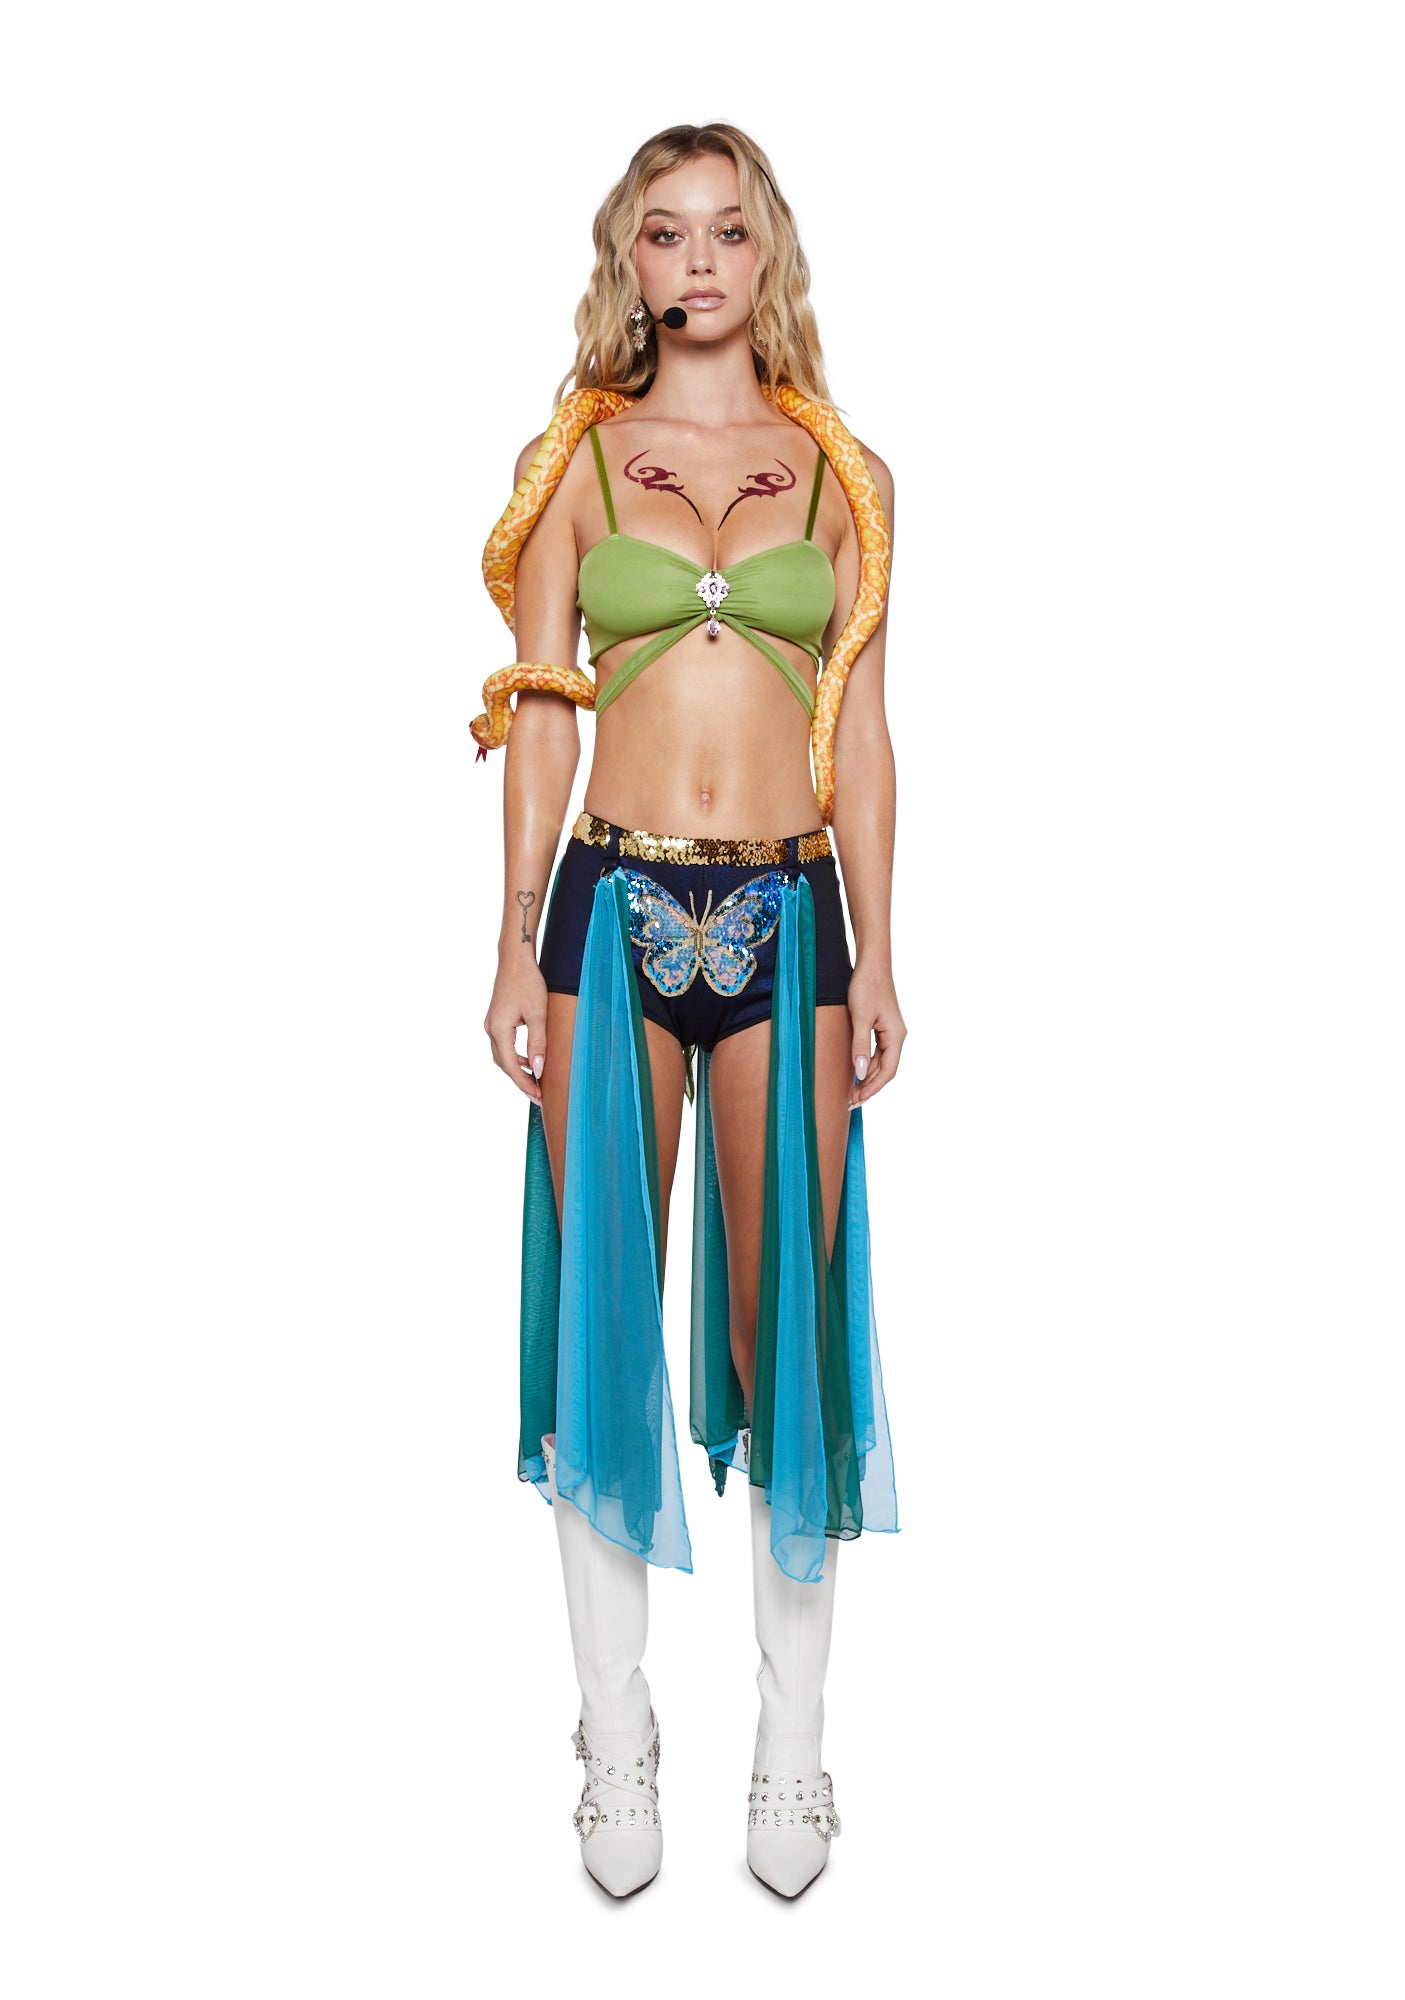 7 Best Britney Spears Halloween costume ideas  britney spears halloween  costume, britney spears, britney spears costume